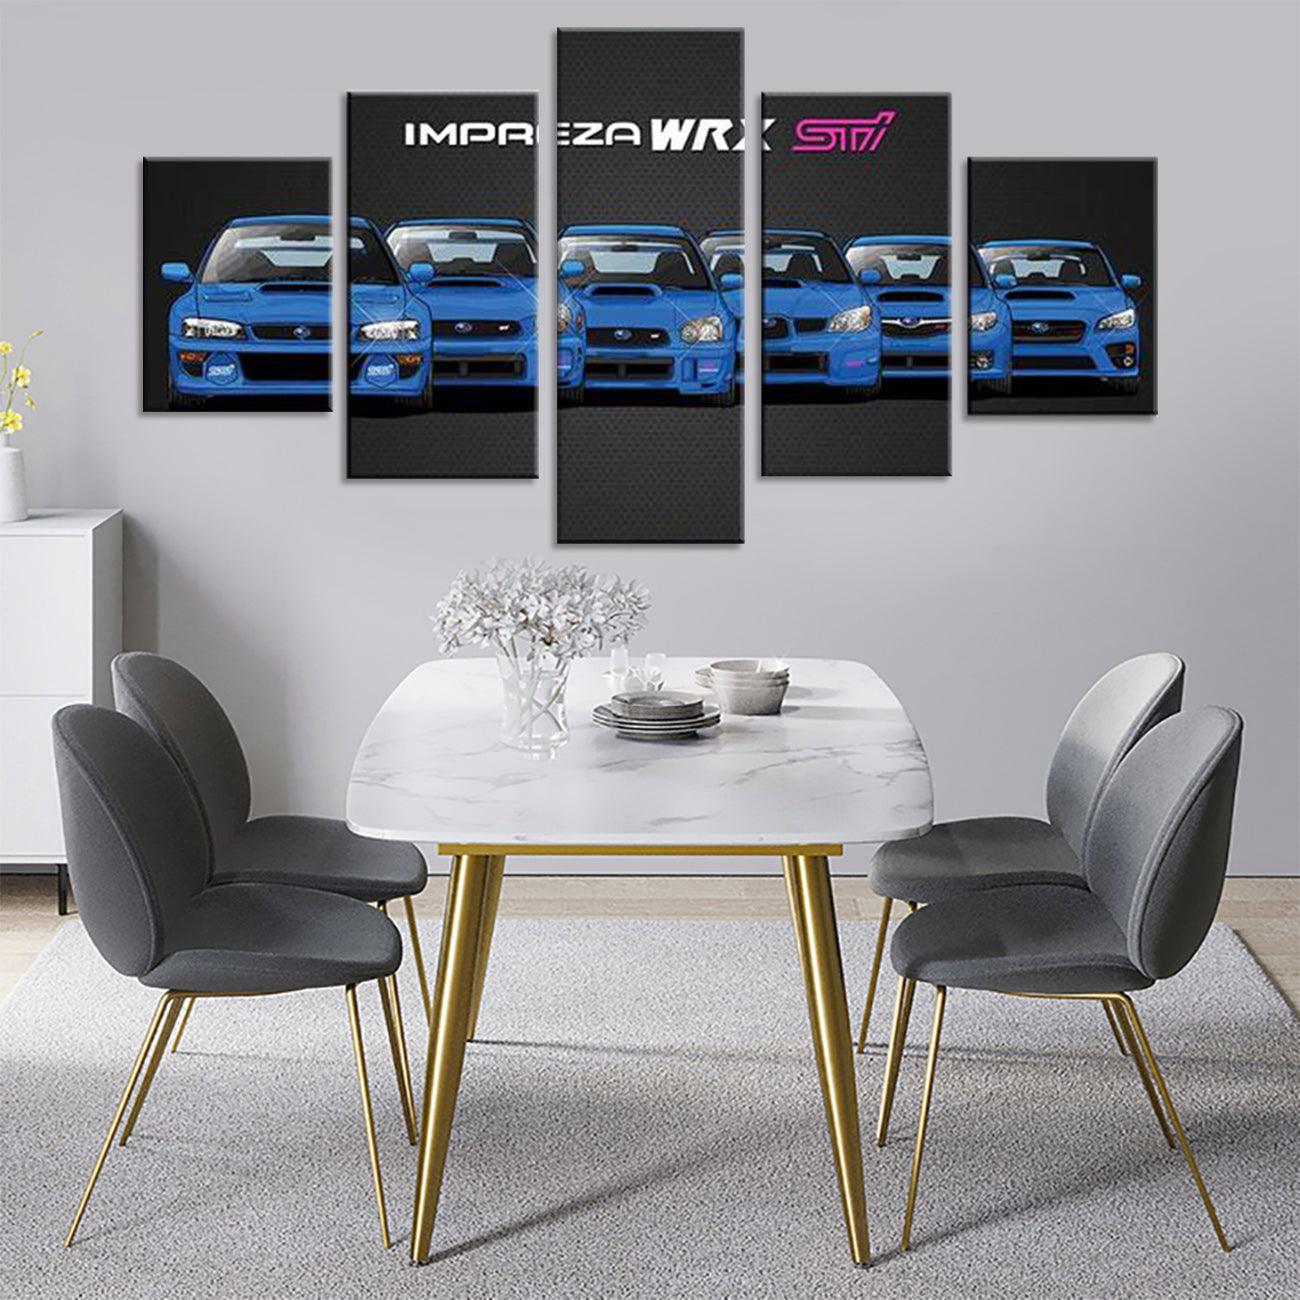 Subaru Impreza WRX STI Family 5 Panel Canvas Print Wall Art - GotItHere.com